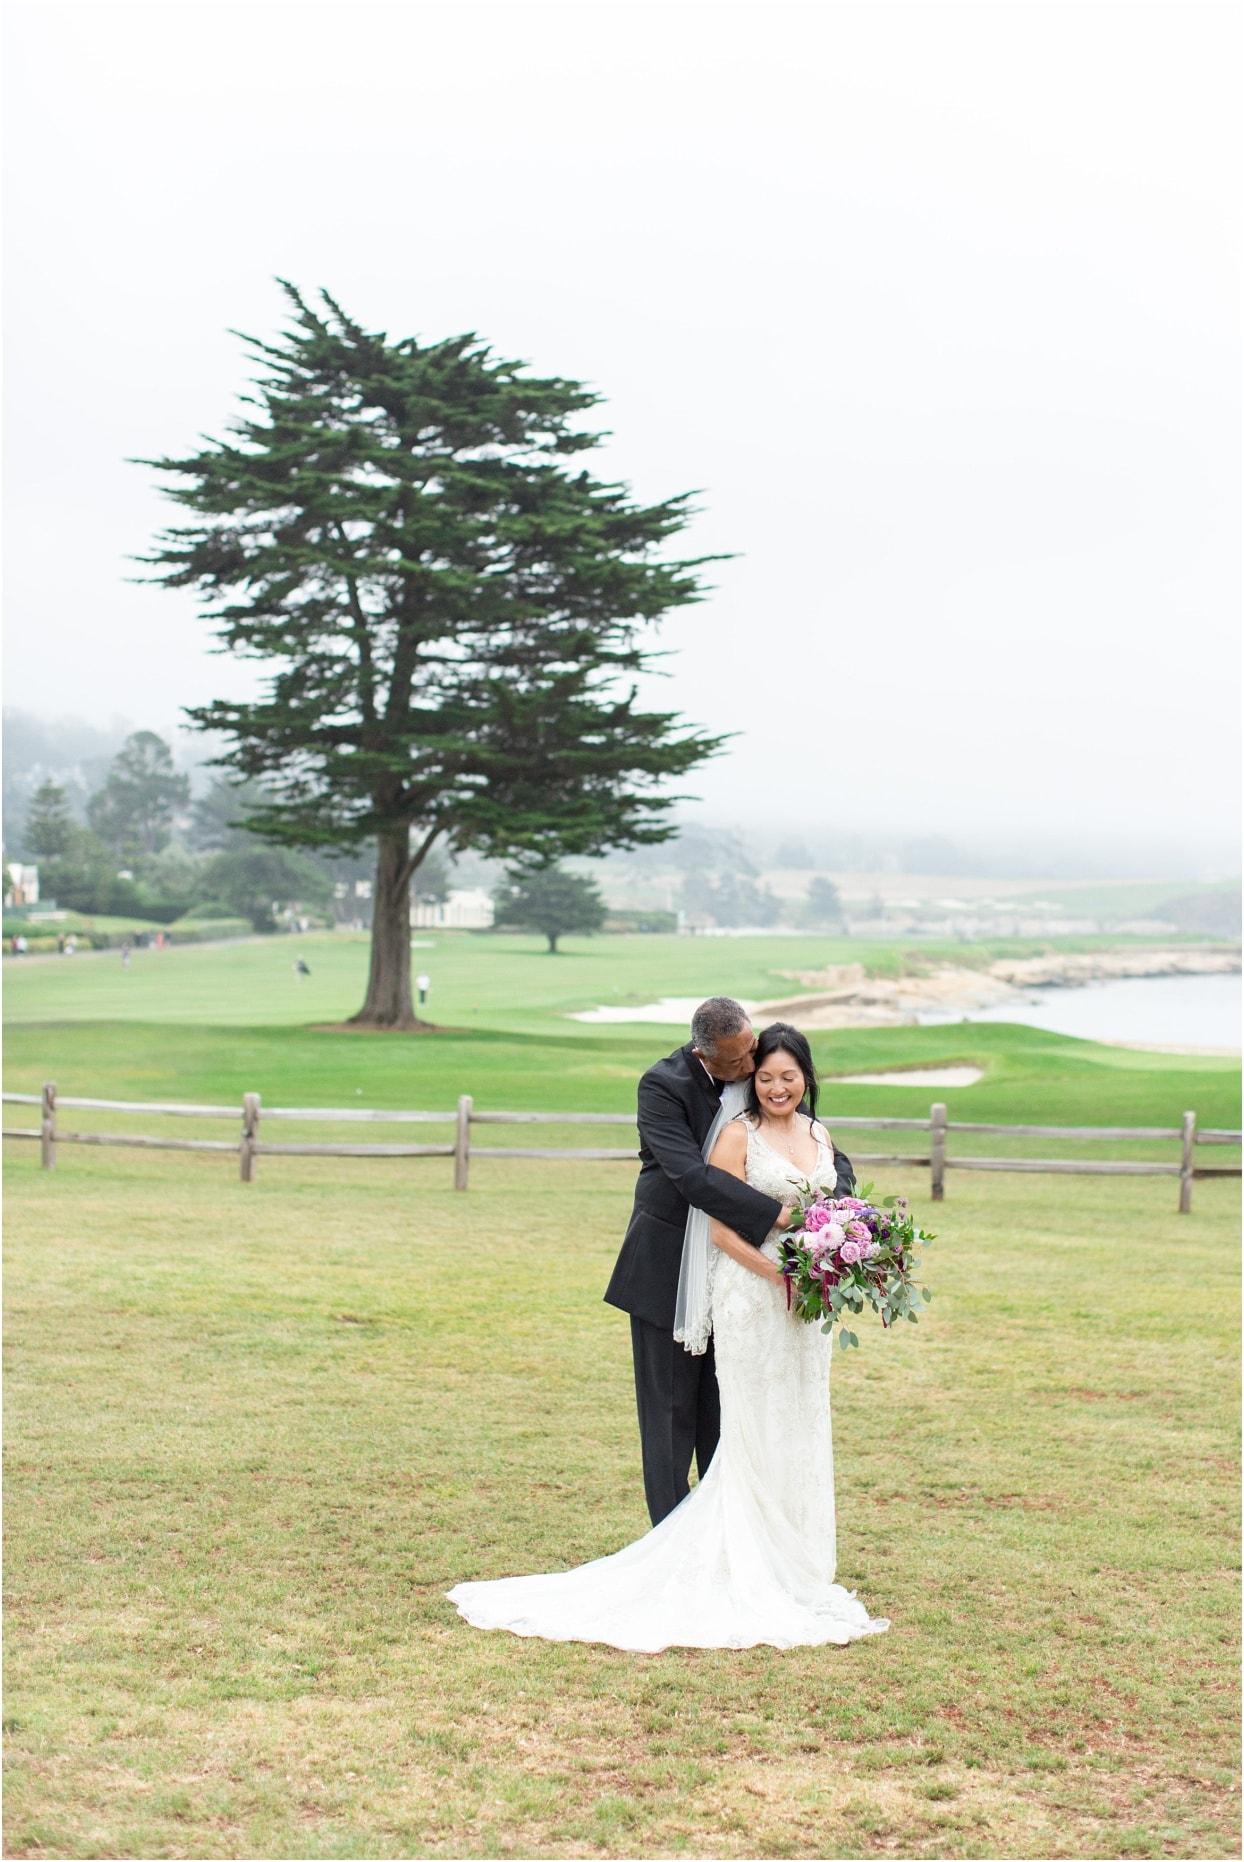 Best of Weddings 2017 | Monterey, Carmel, Big Sur, California Weddings | Laura & Rachel Photography